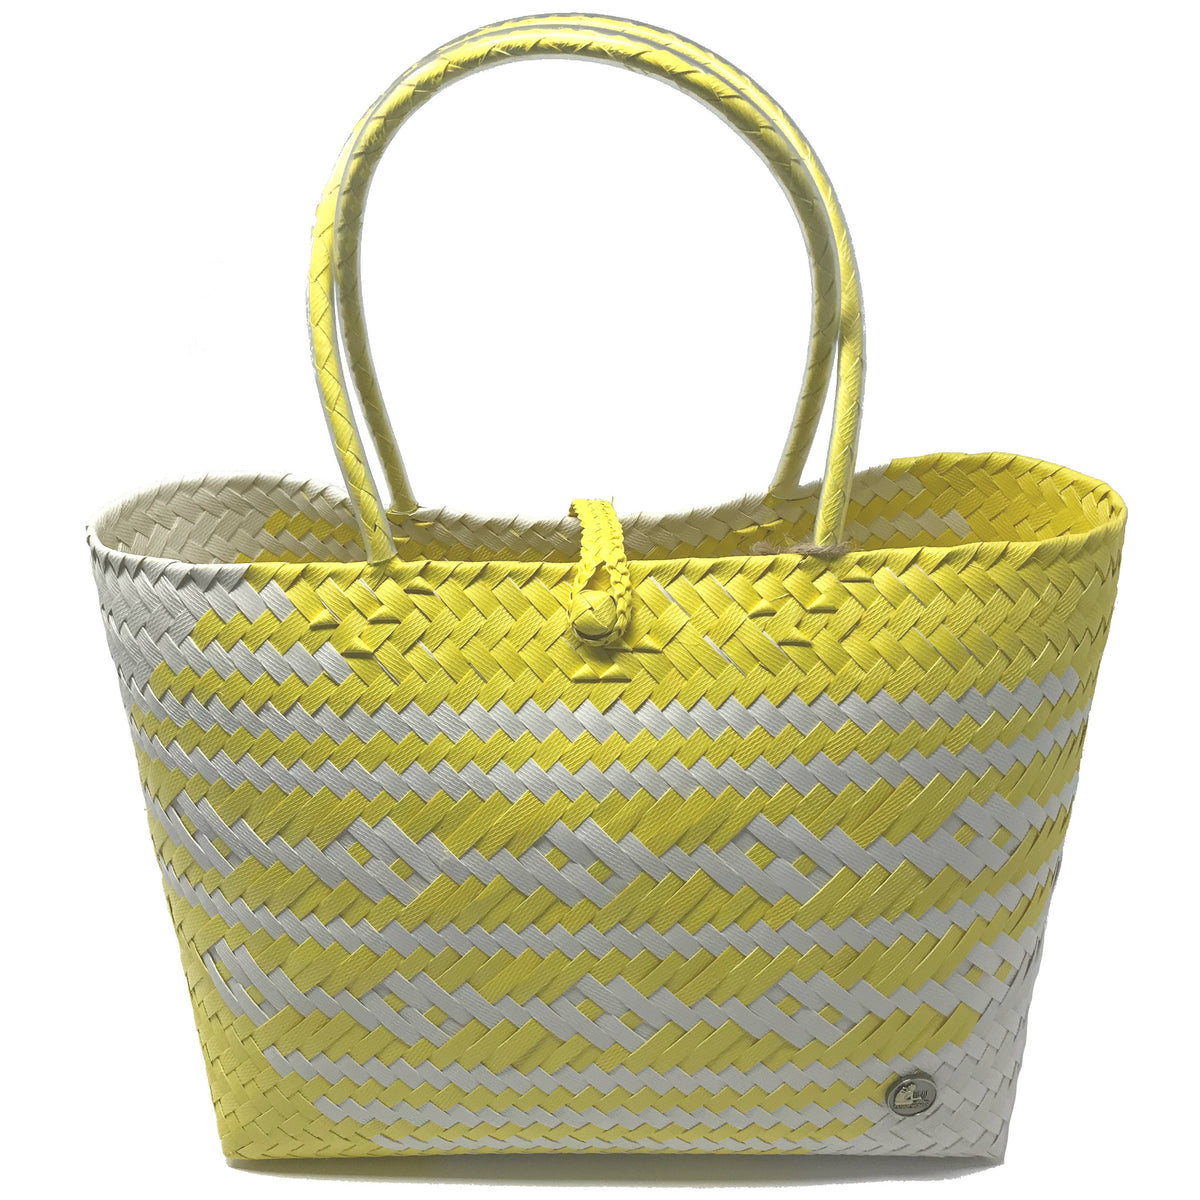 Everyday Tote Bag - Yellow & White